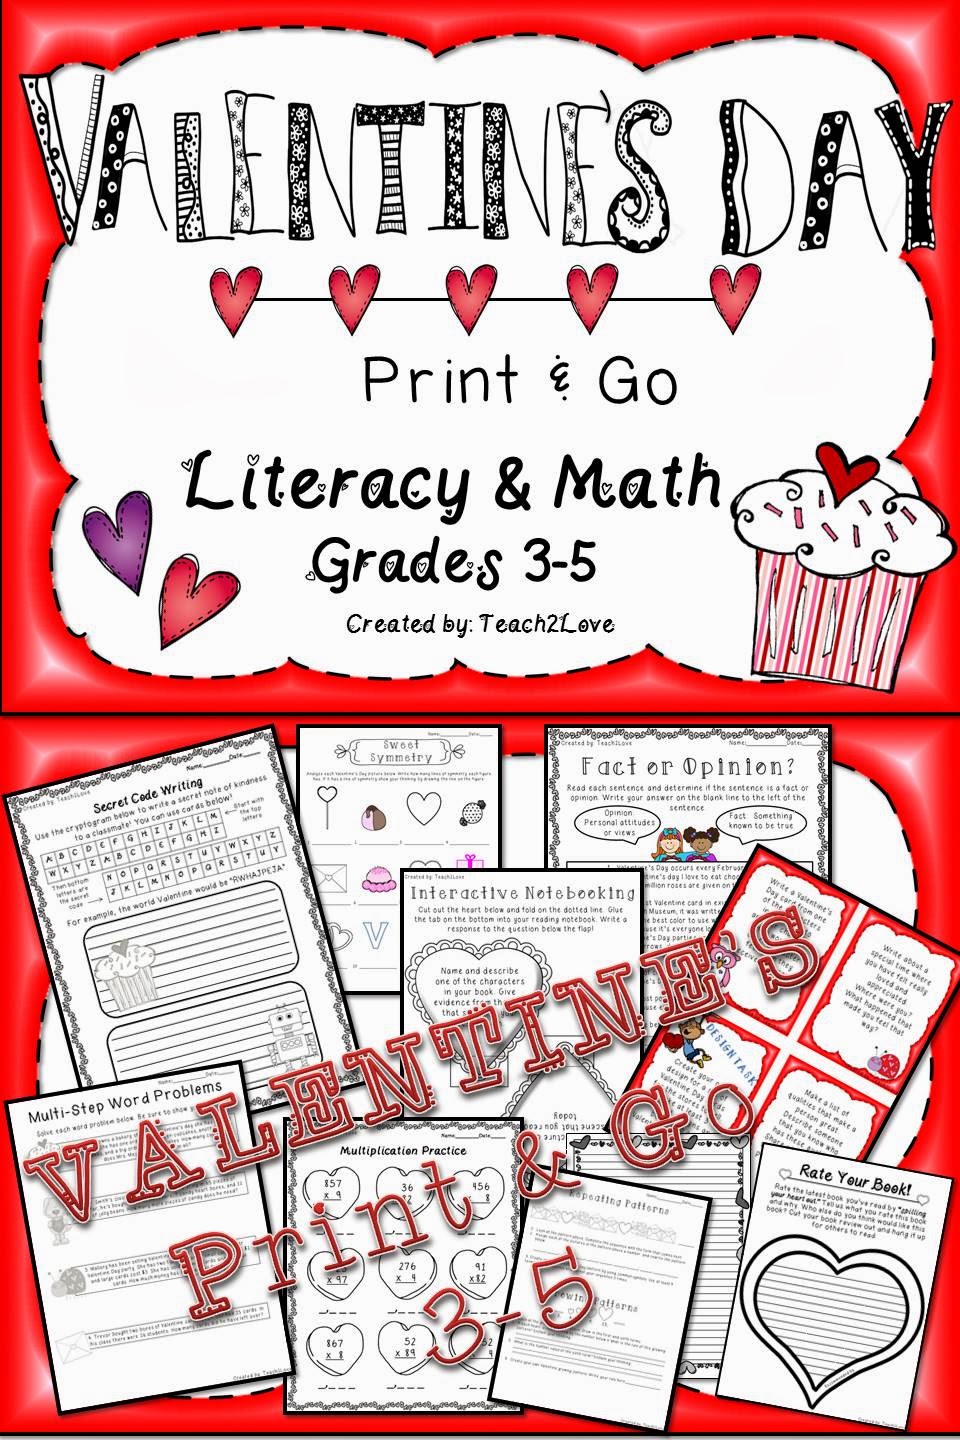 http://www.teacherspayteachers.com/Product/Valentines-Day-Literacy-Math-Print-and-Go-Activities-1097710